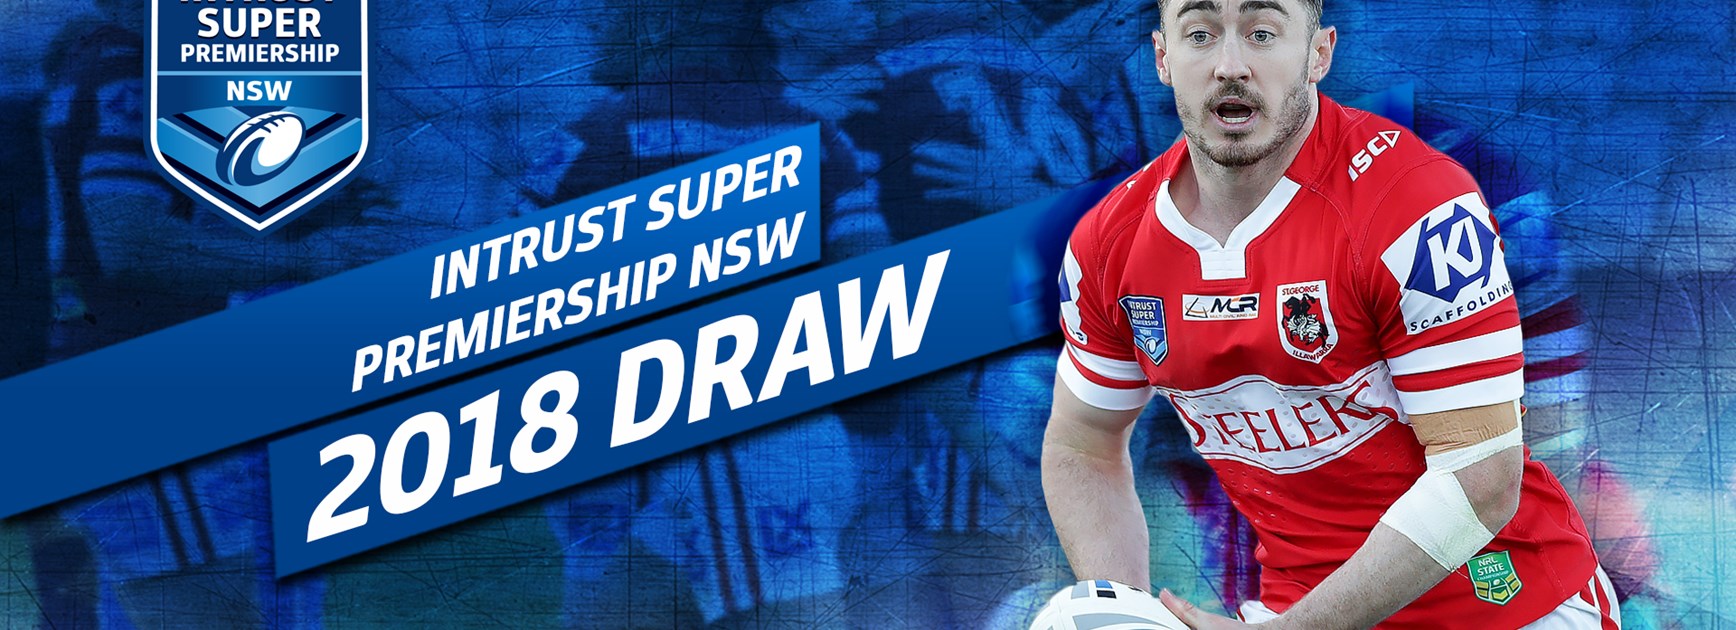 2018 DRAW | Intrust Super Premiership NSW